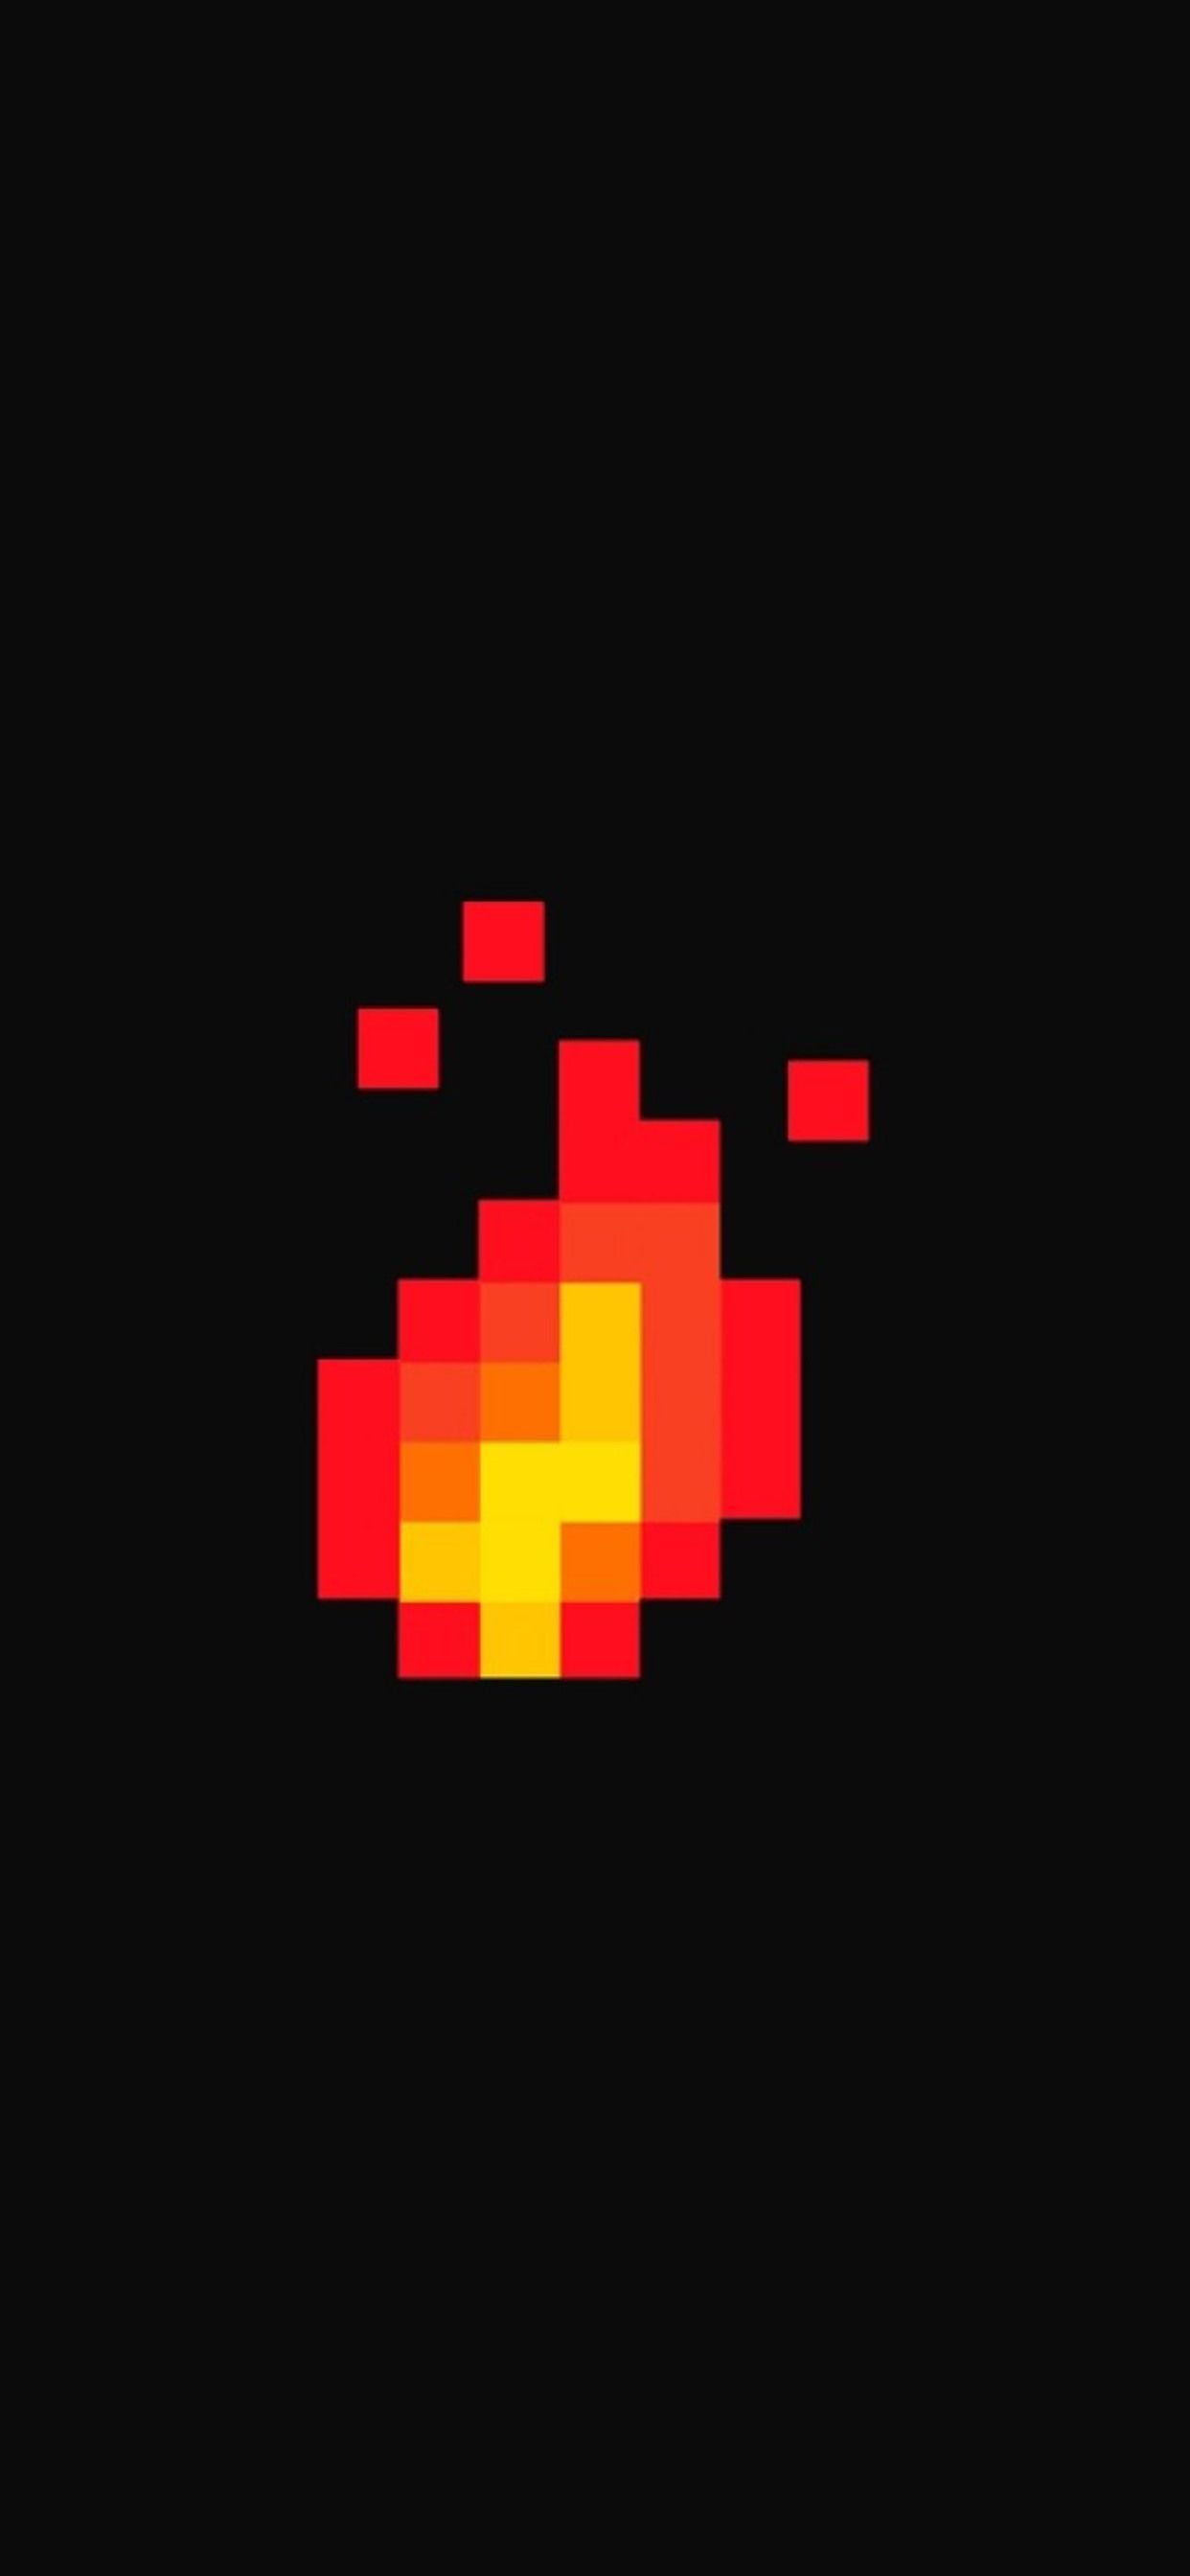 Fire Pixel Art iPhone XS MAX HD 4k Wallpaper, Image